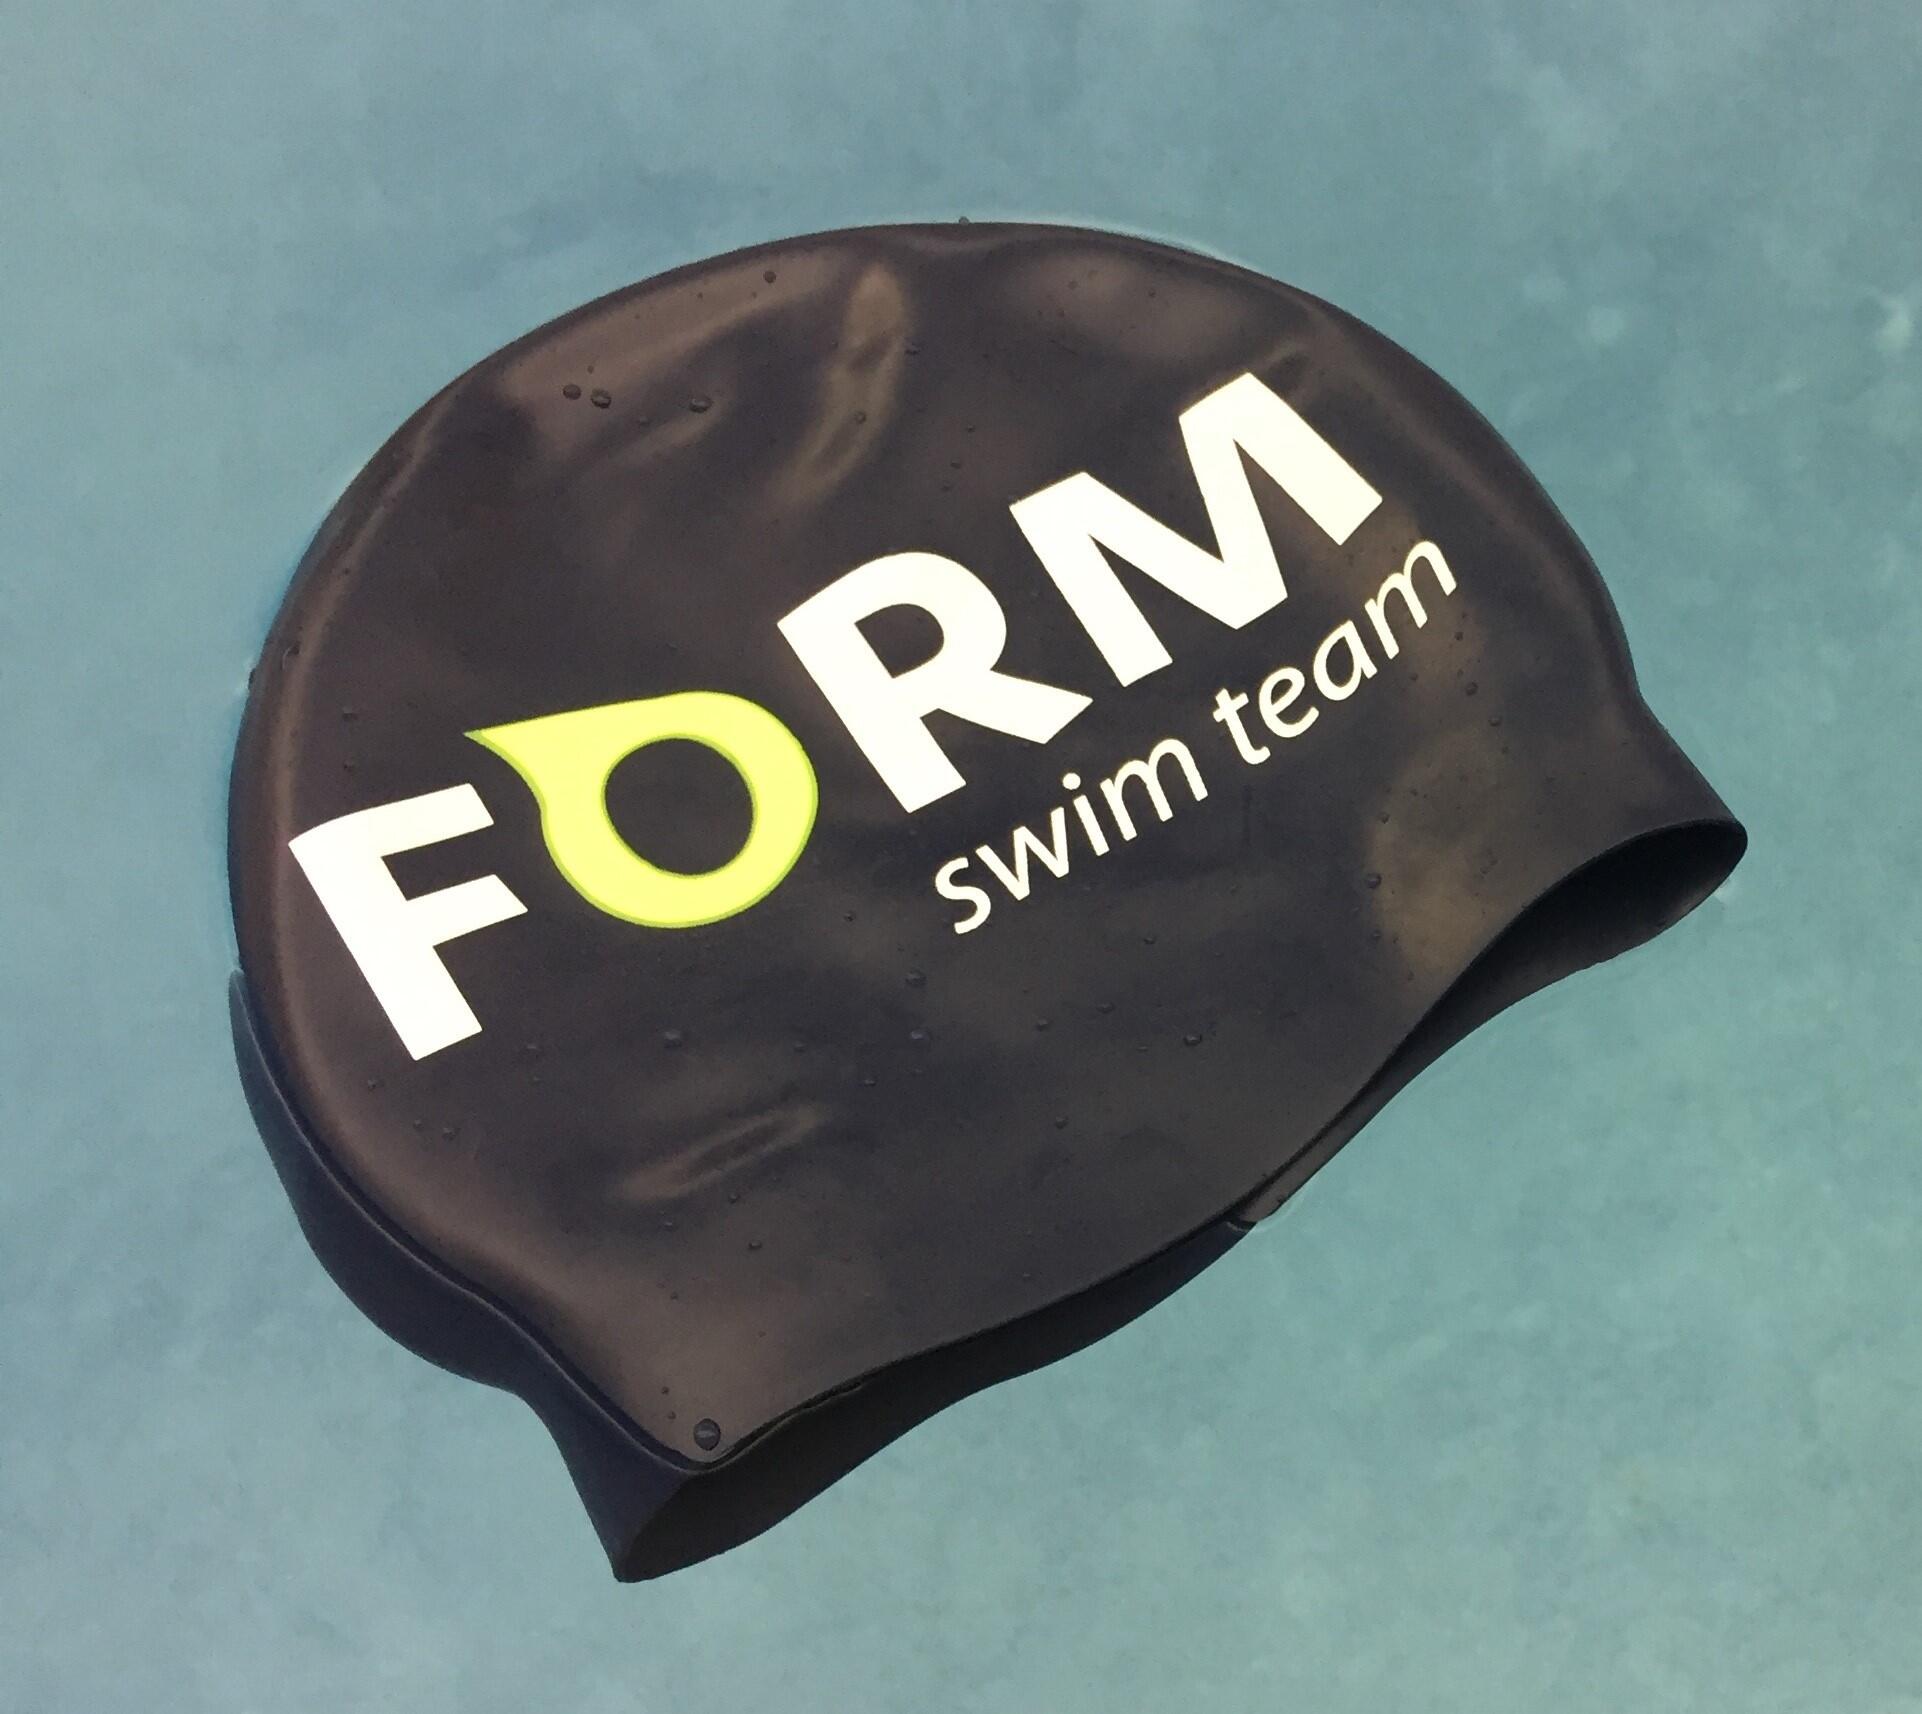 Form Swim Team - Centennial, CO - Nextdoor